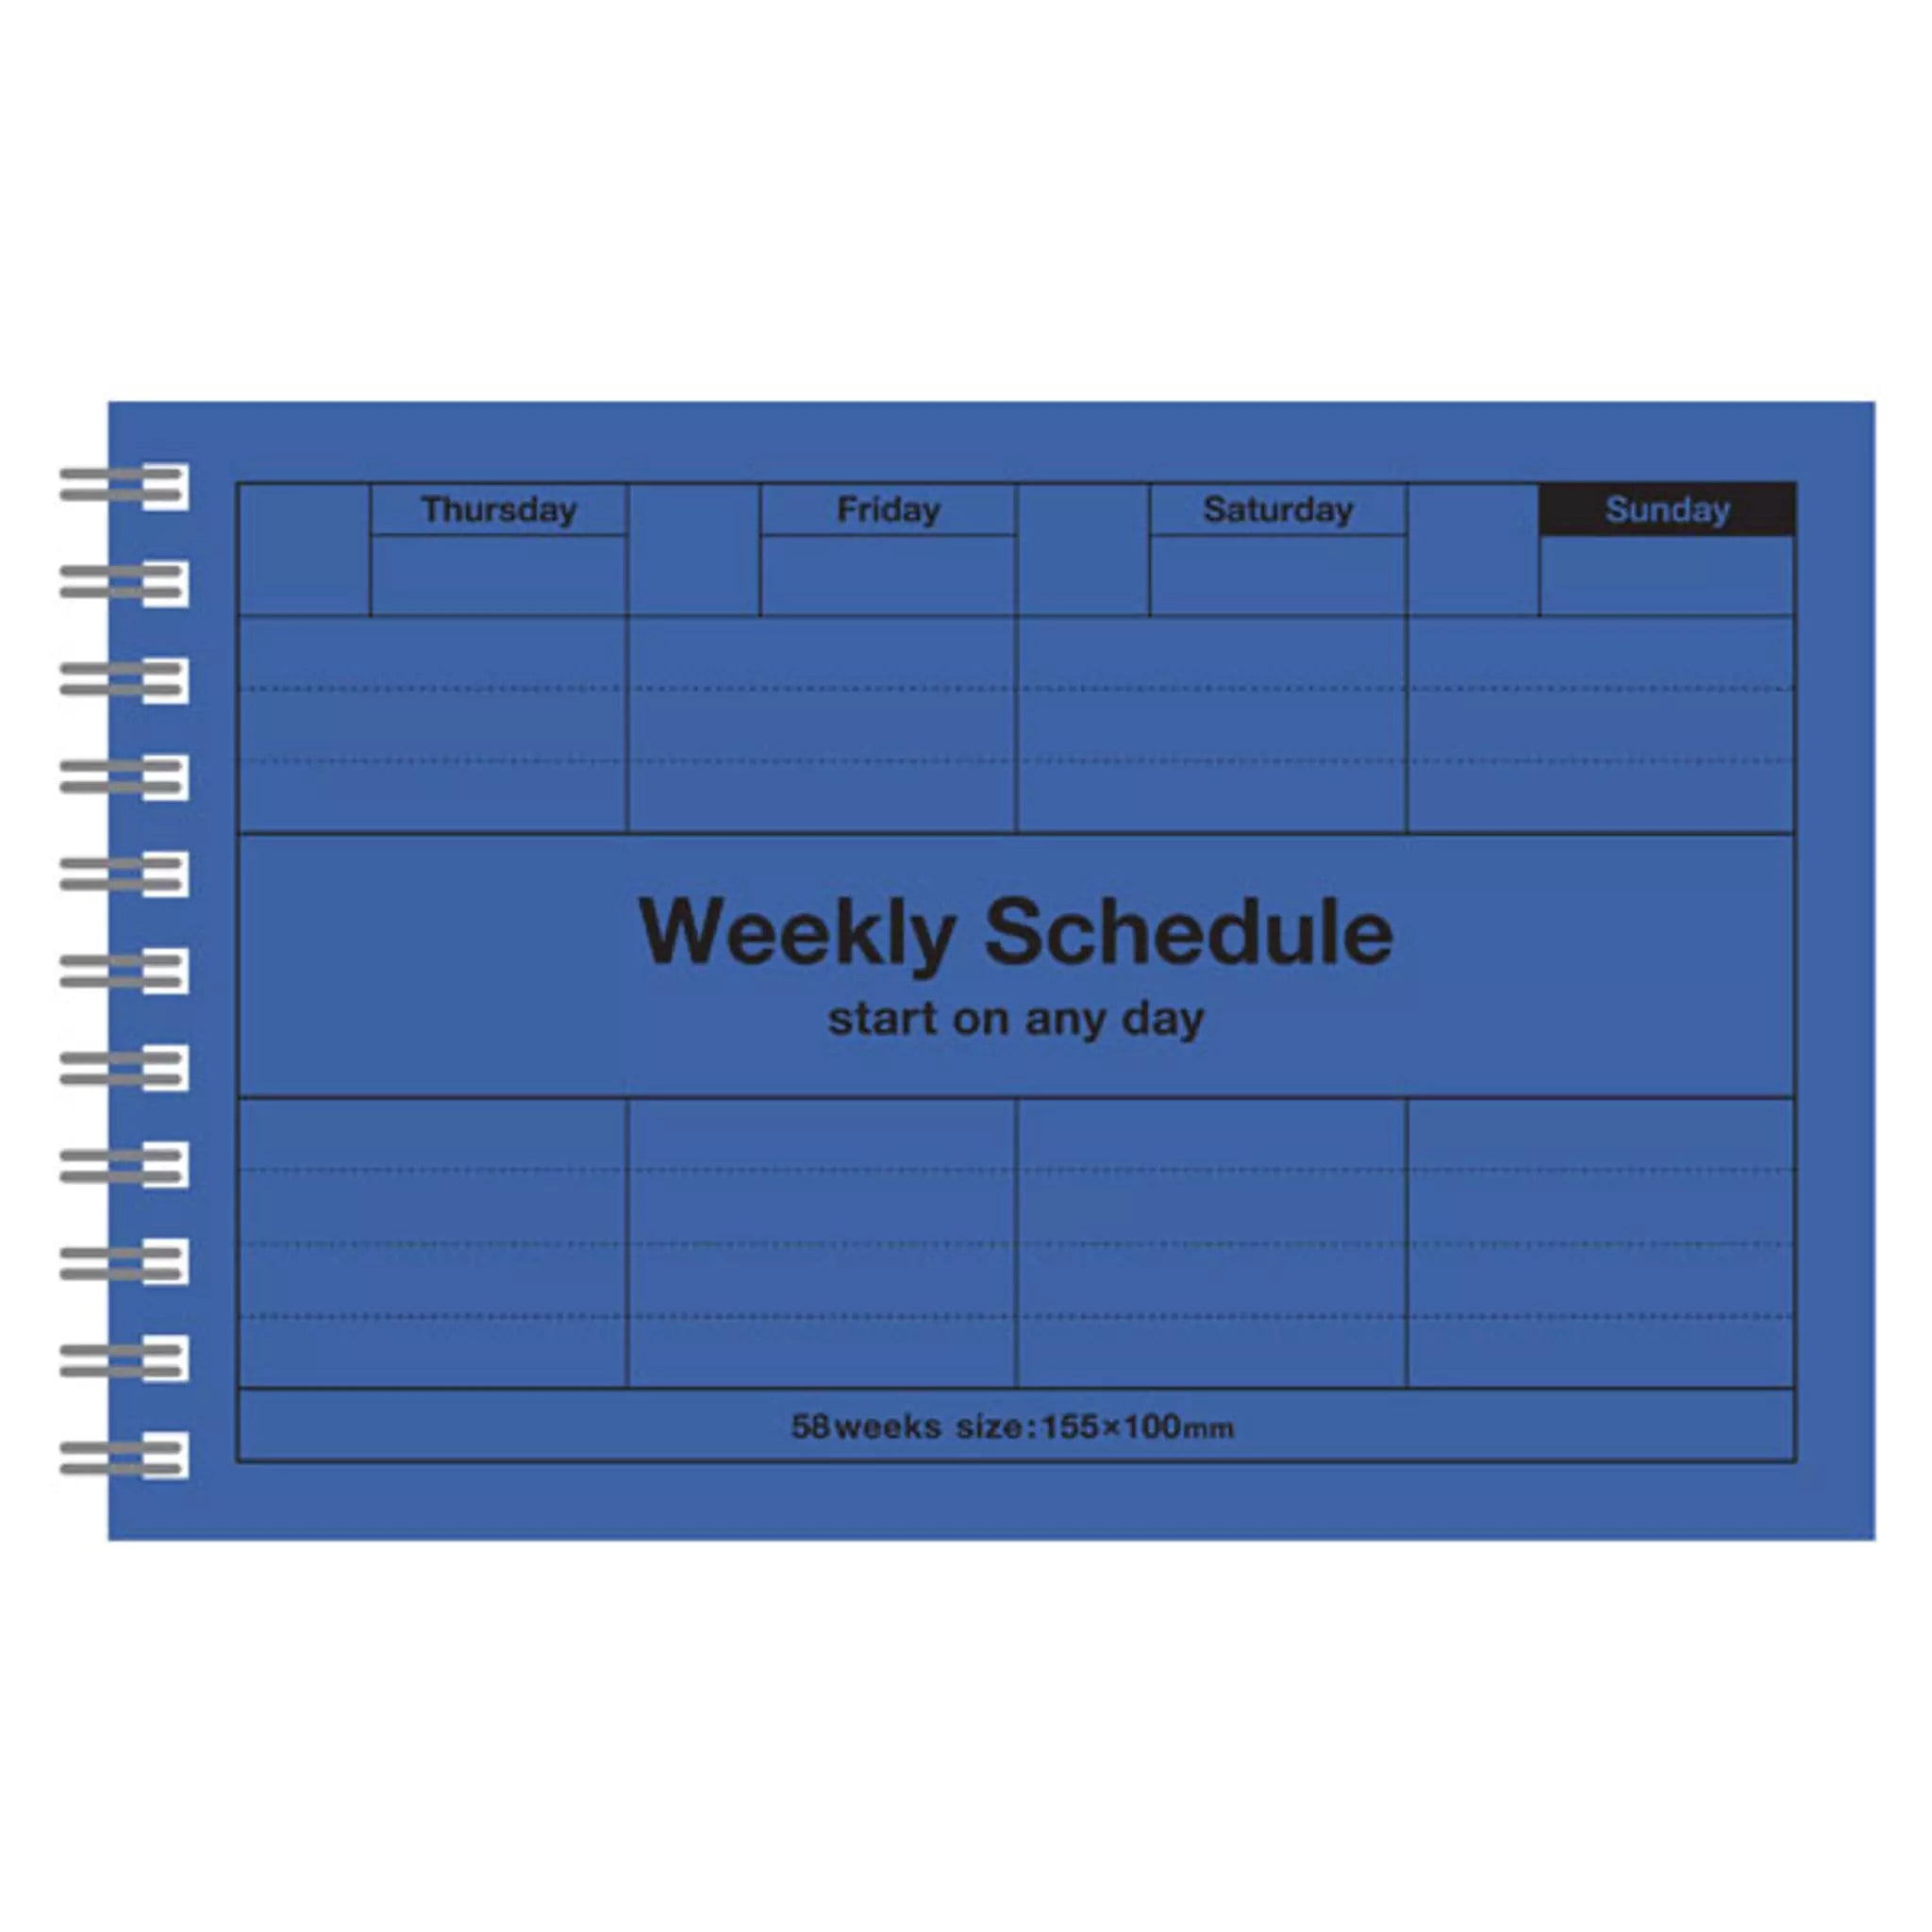 Weekly Schedule - Blue